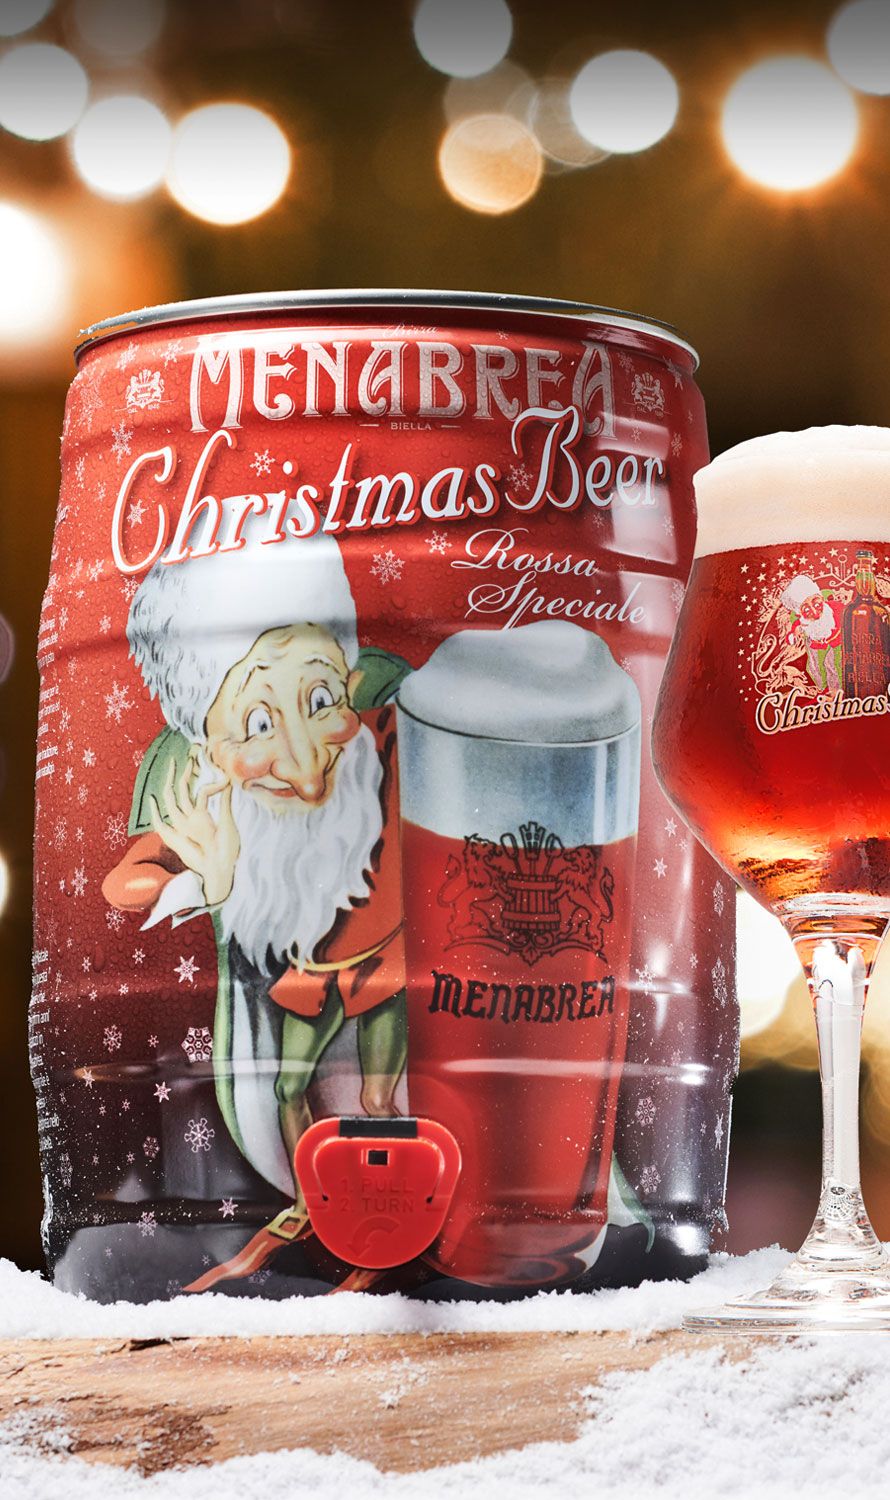 Menabrea Christmas Beer Mobile Image